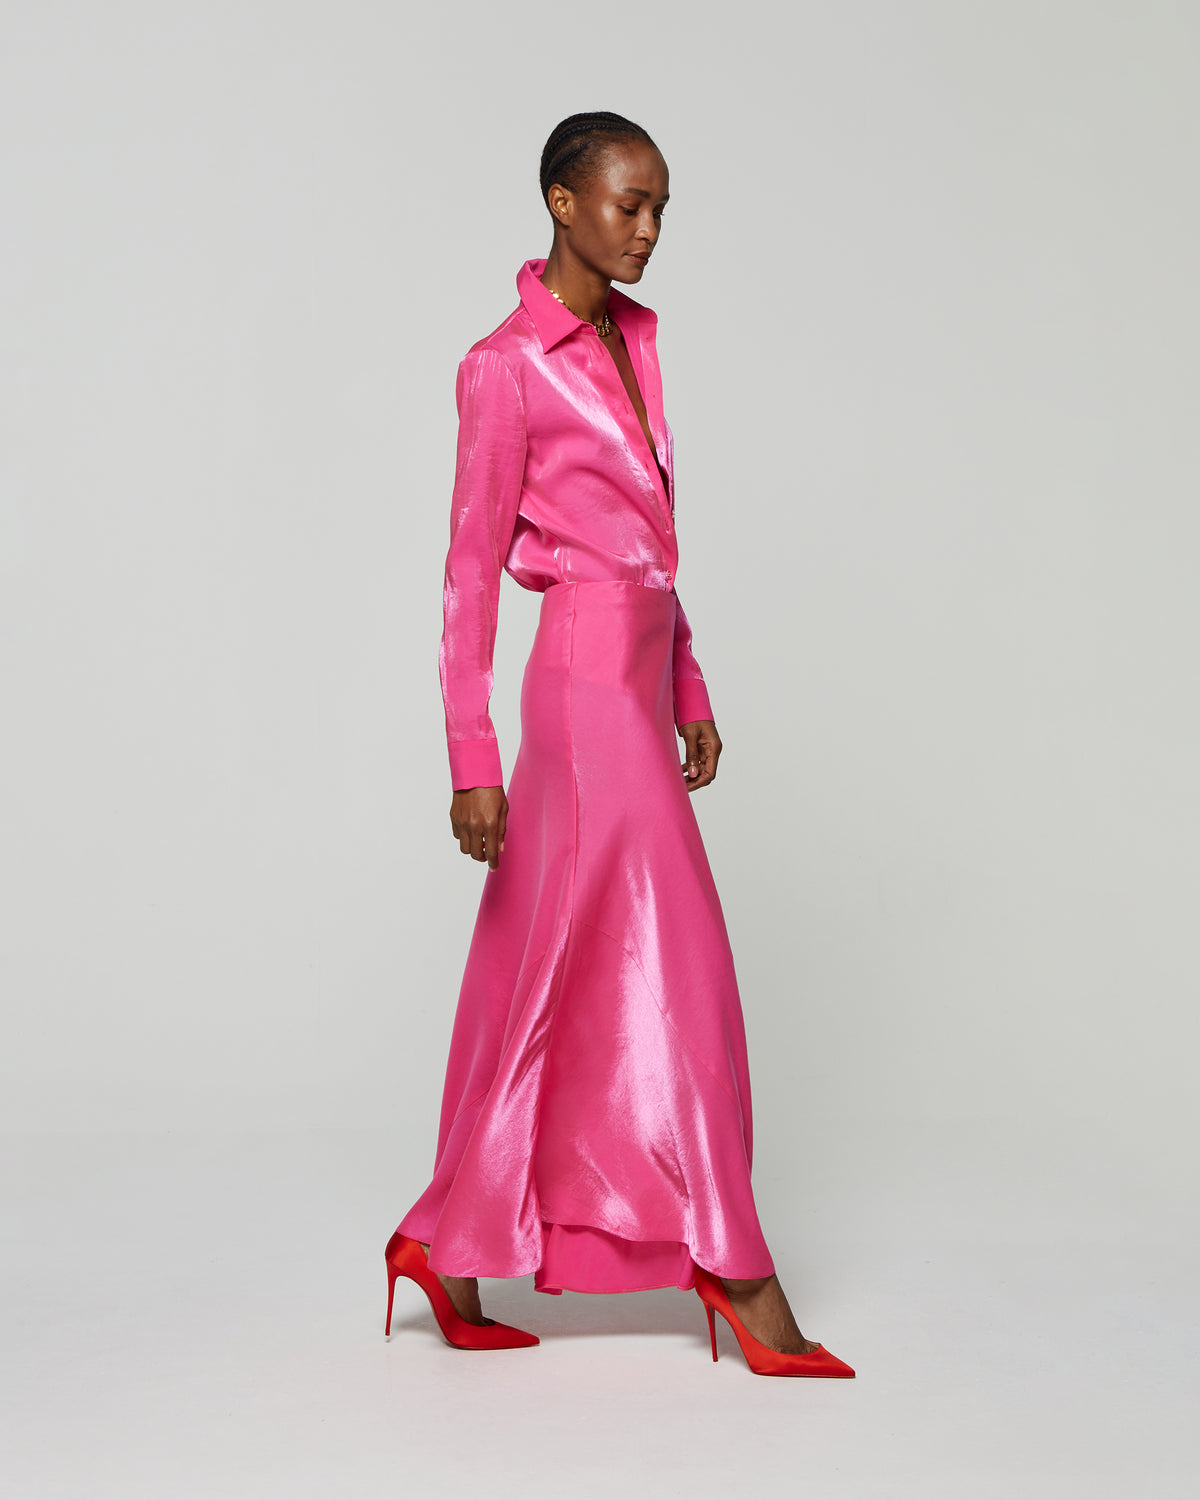 Bias Maxi Skirt - Fluro Pink